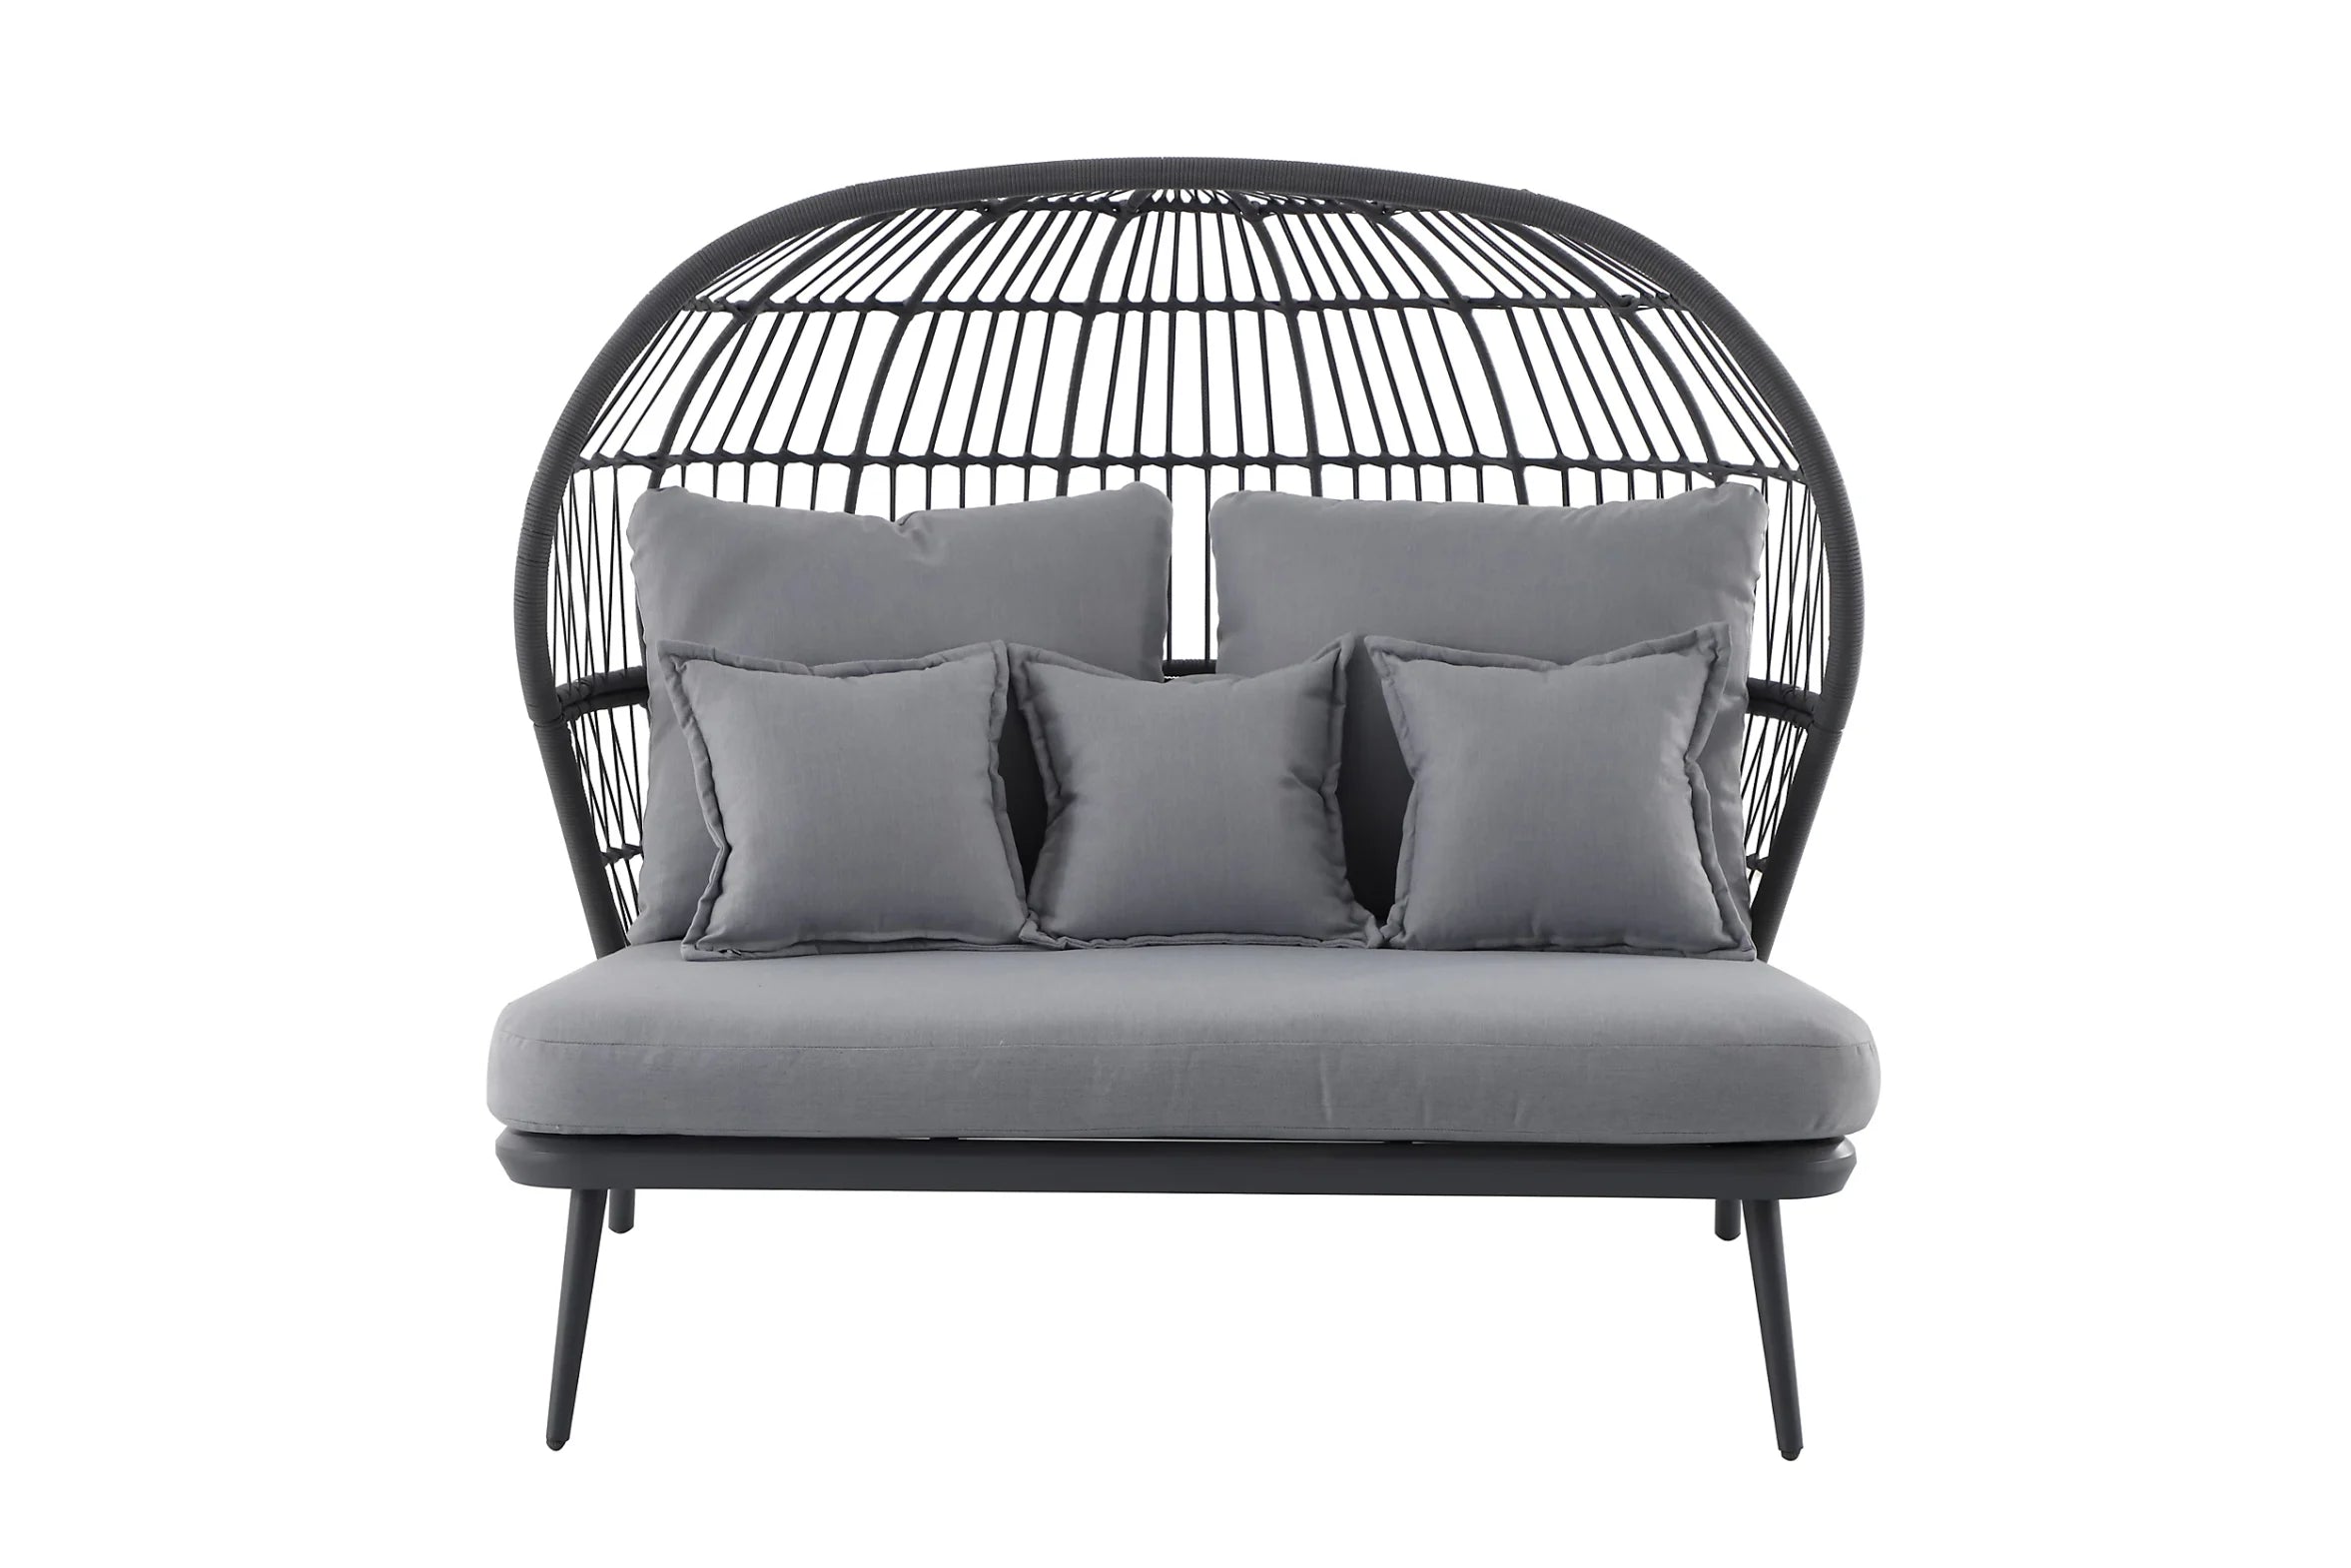 GoodHome Apolima Grey Aluminium grey Rattan effect Daybed, Garden furniture set - 8003